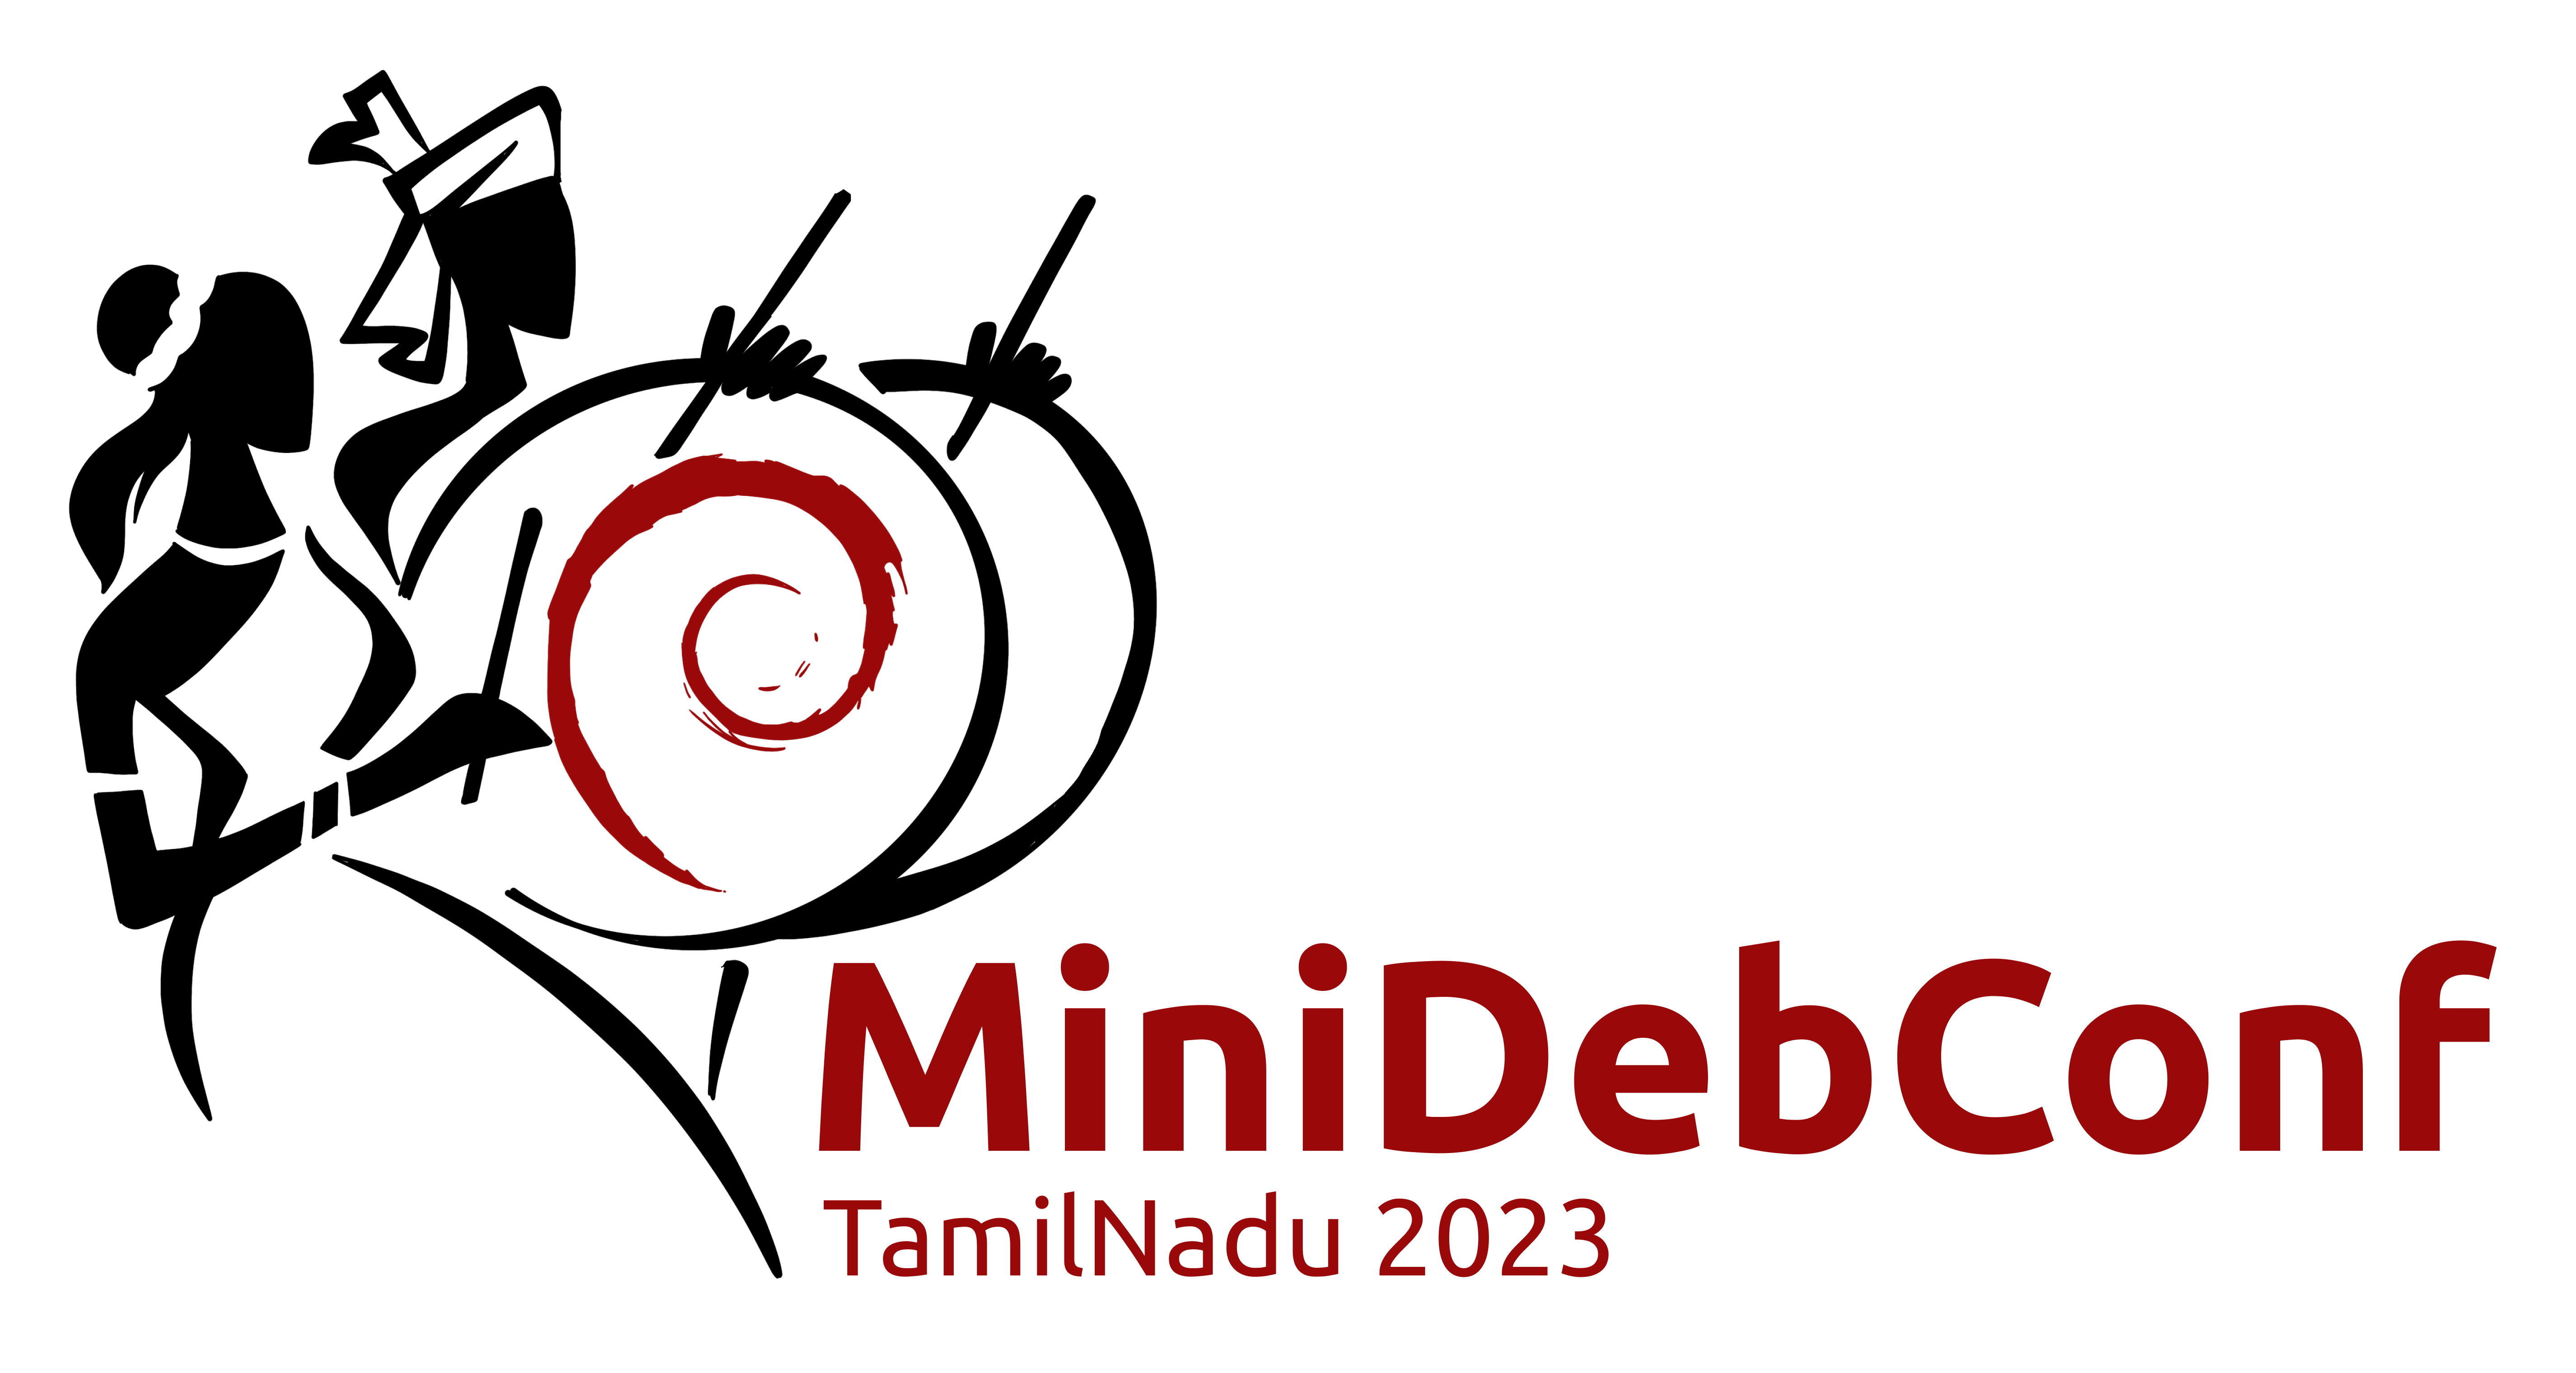 Official Logo of MiniDebConf 2023, TamilNadu, India